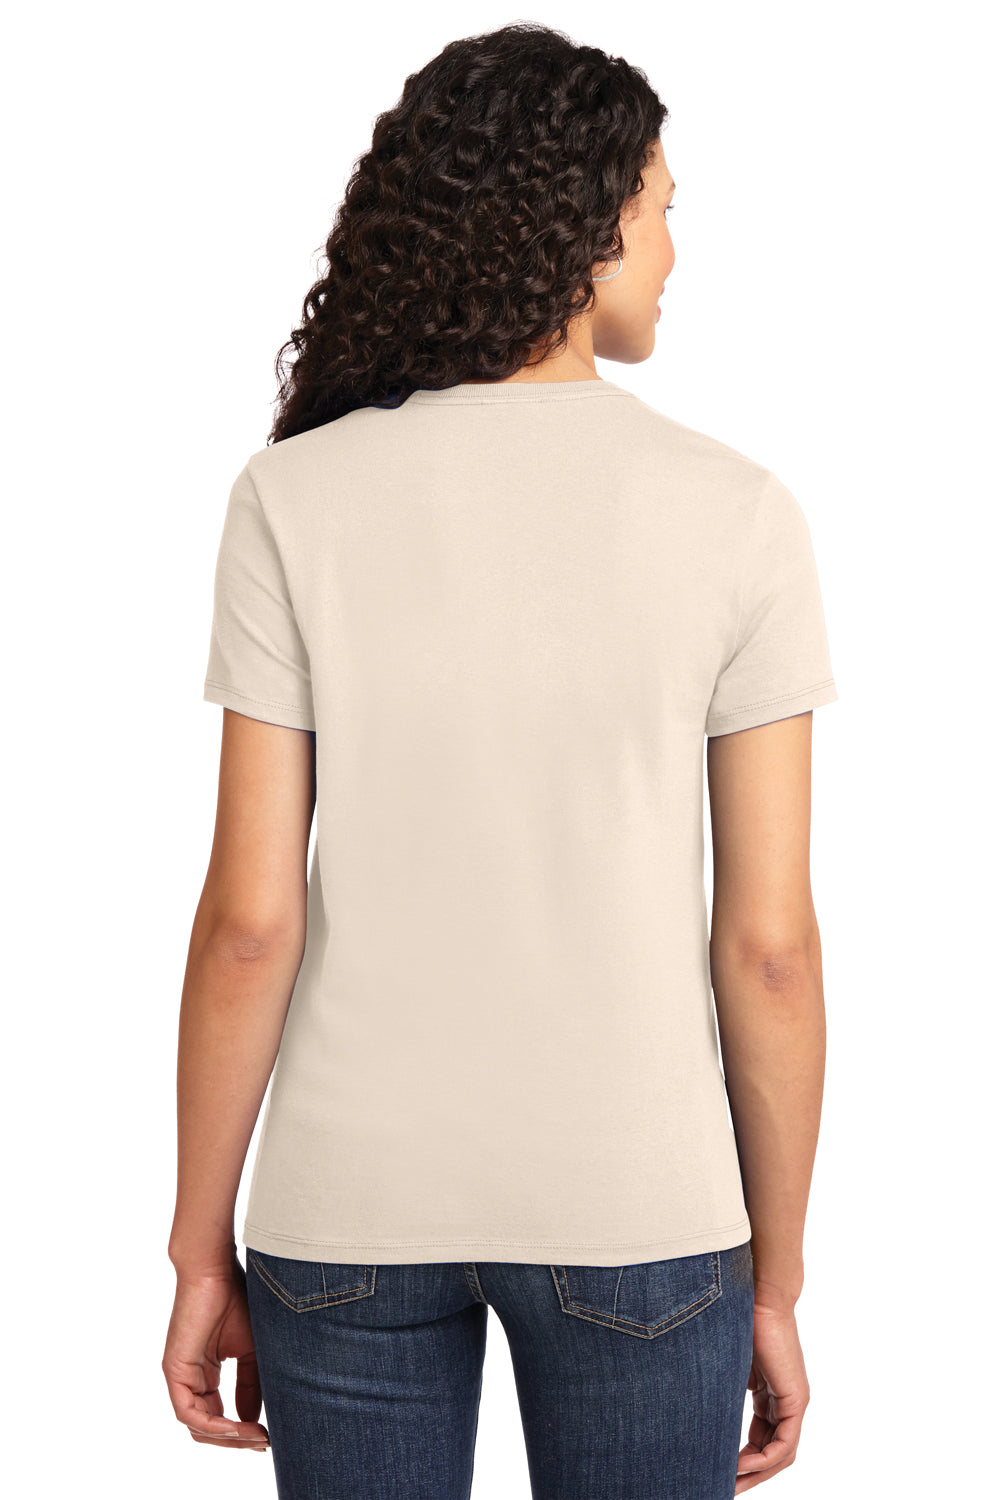 Port & Company LPC61 Womens Essential Short Sleeve Crewneck T-Shirt Natural Back